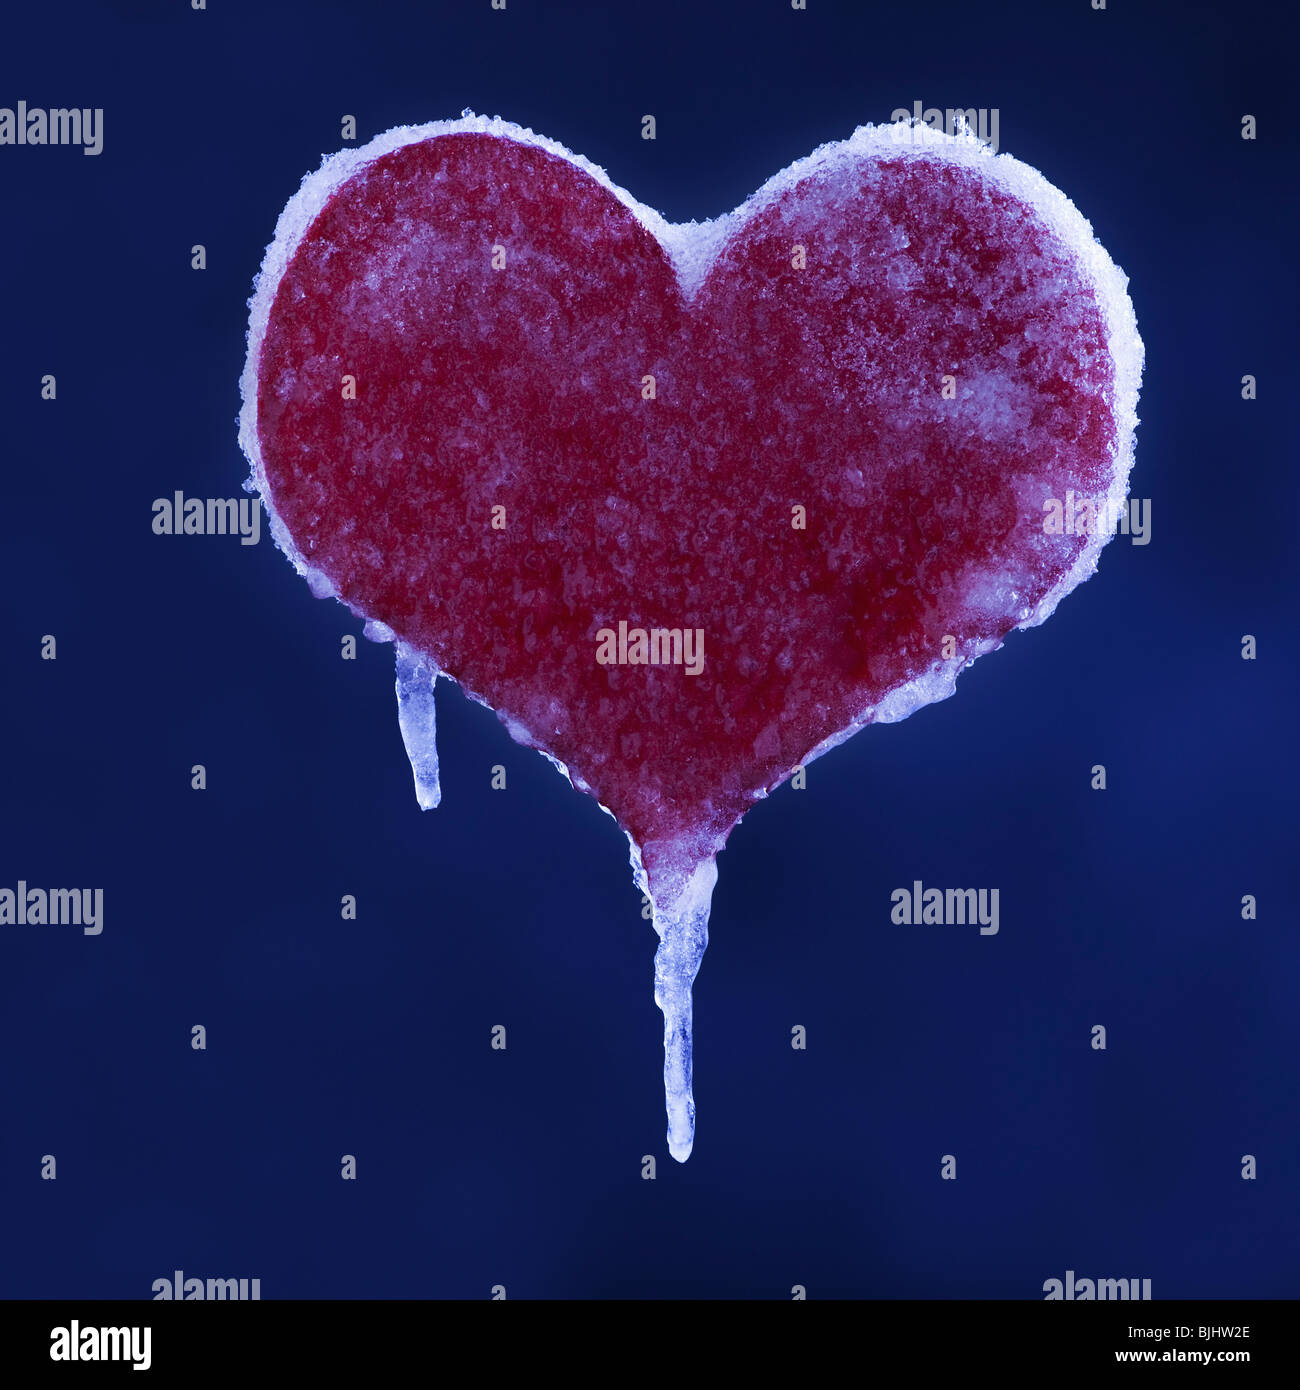 Unduh 80+ Gambar Frozen Heart Terbaru Gratis